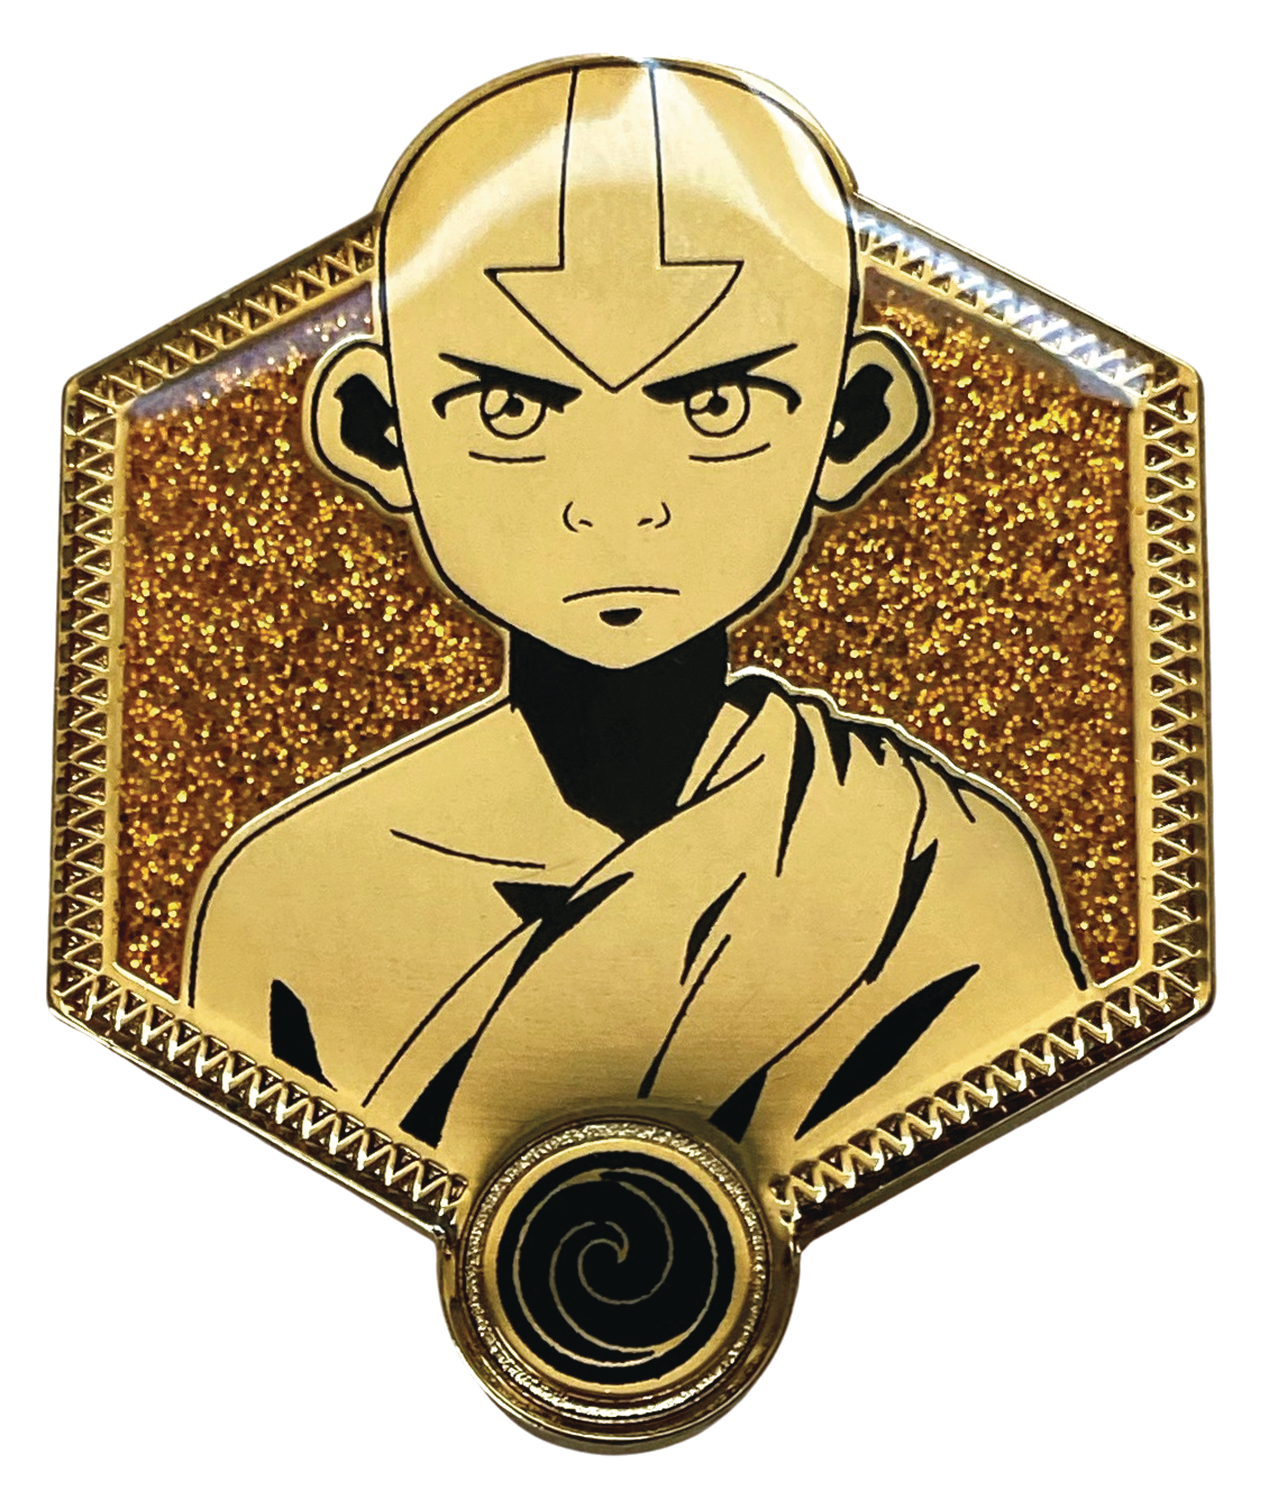 Avatar the Last Airbender Golden Aang Enamel Pin